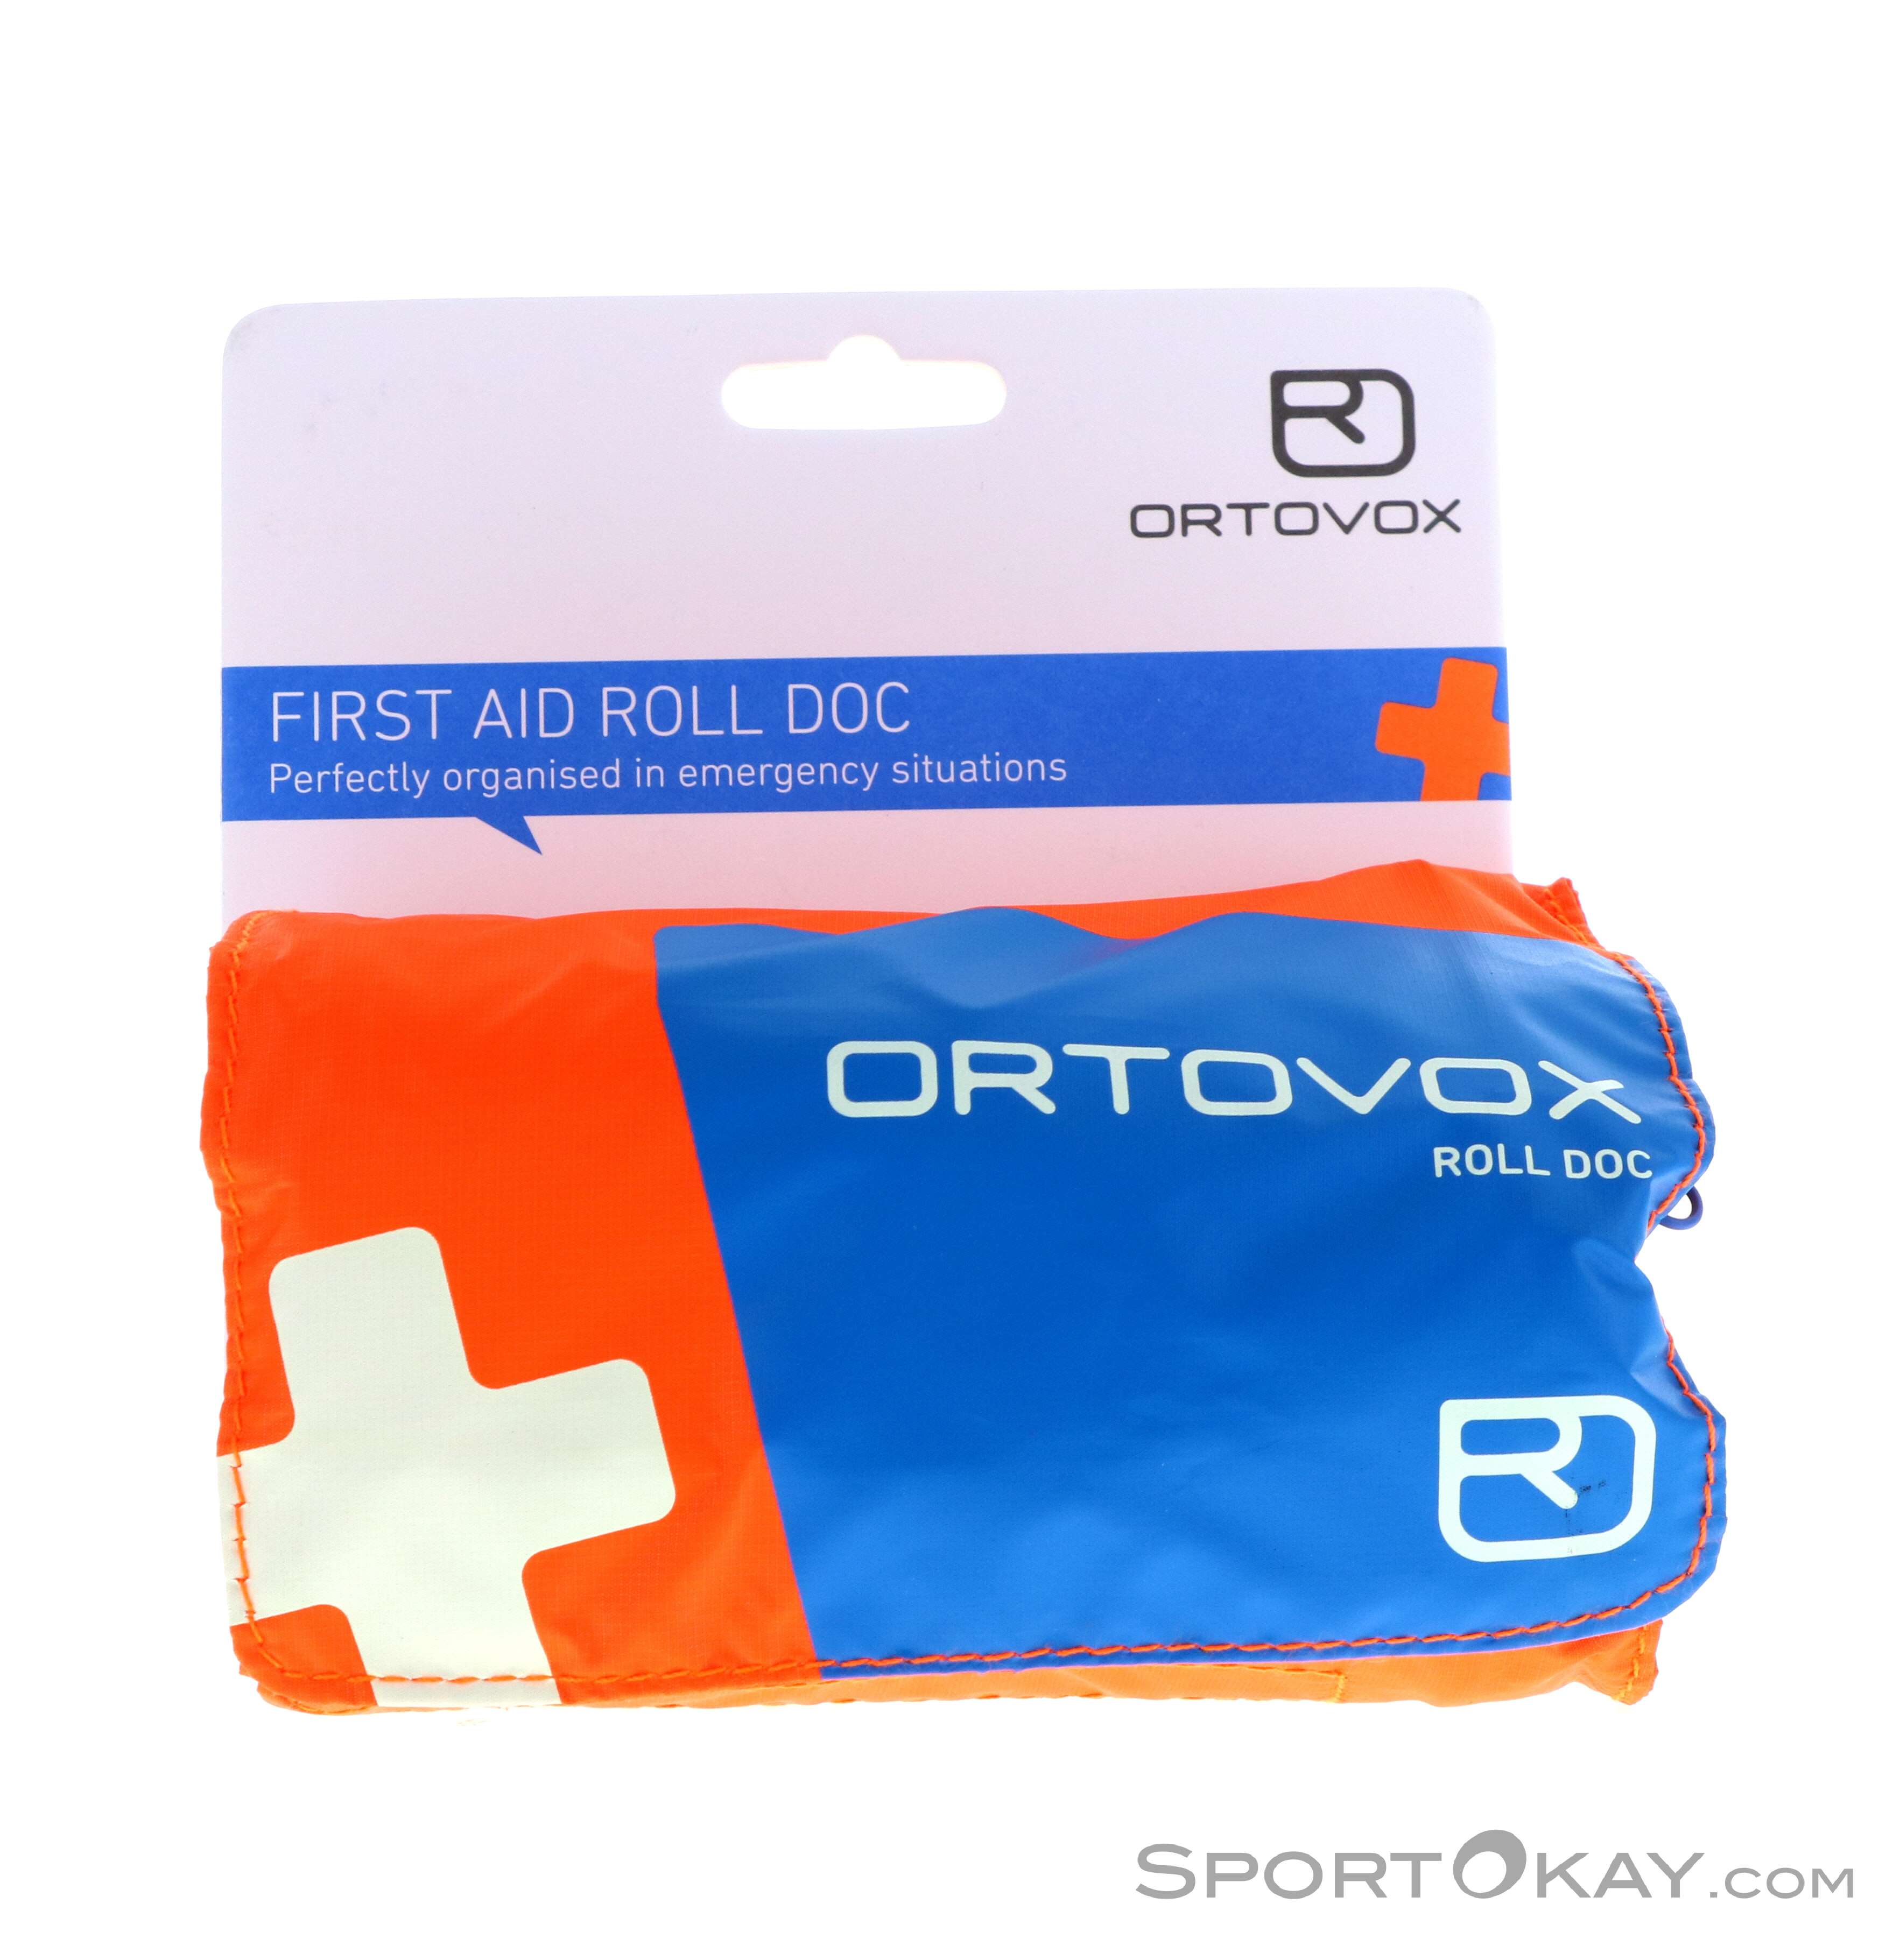 ORTOVOX FIRST AID ROLL DOC, Erste-Hilfe-Sets